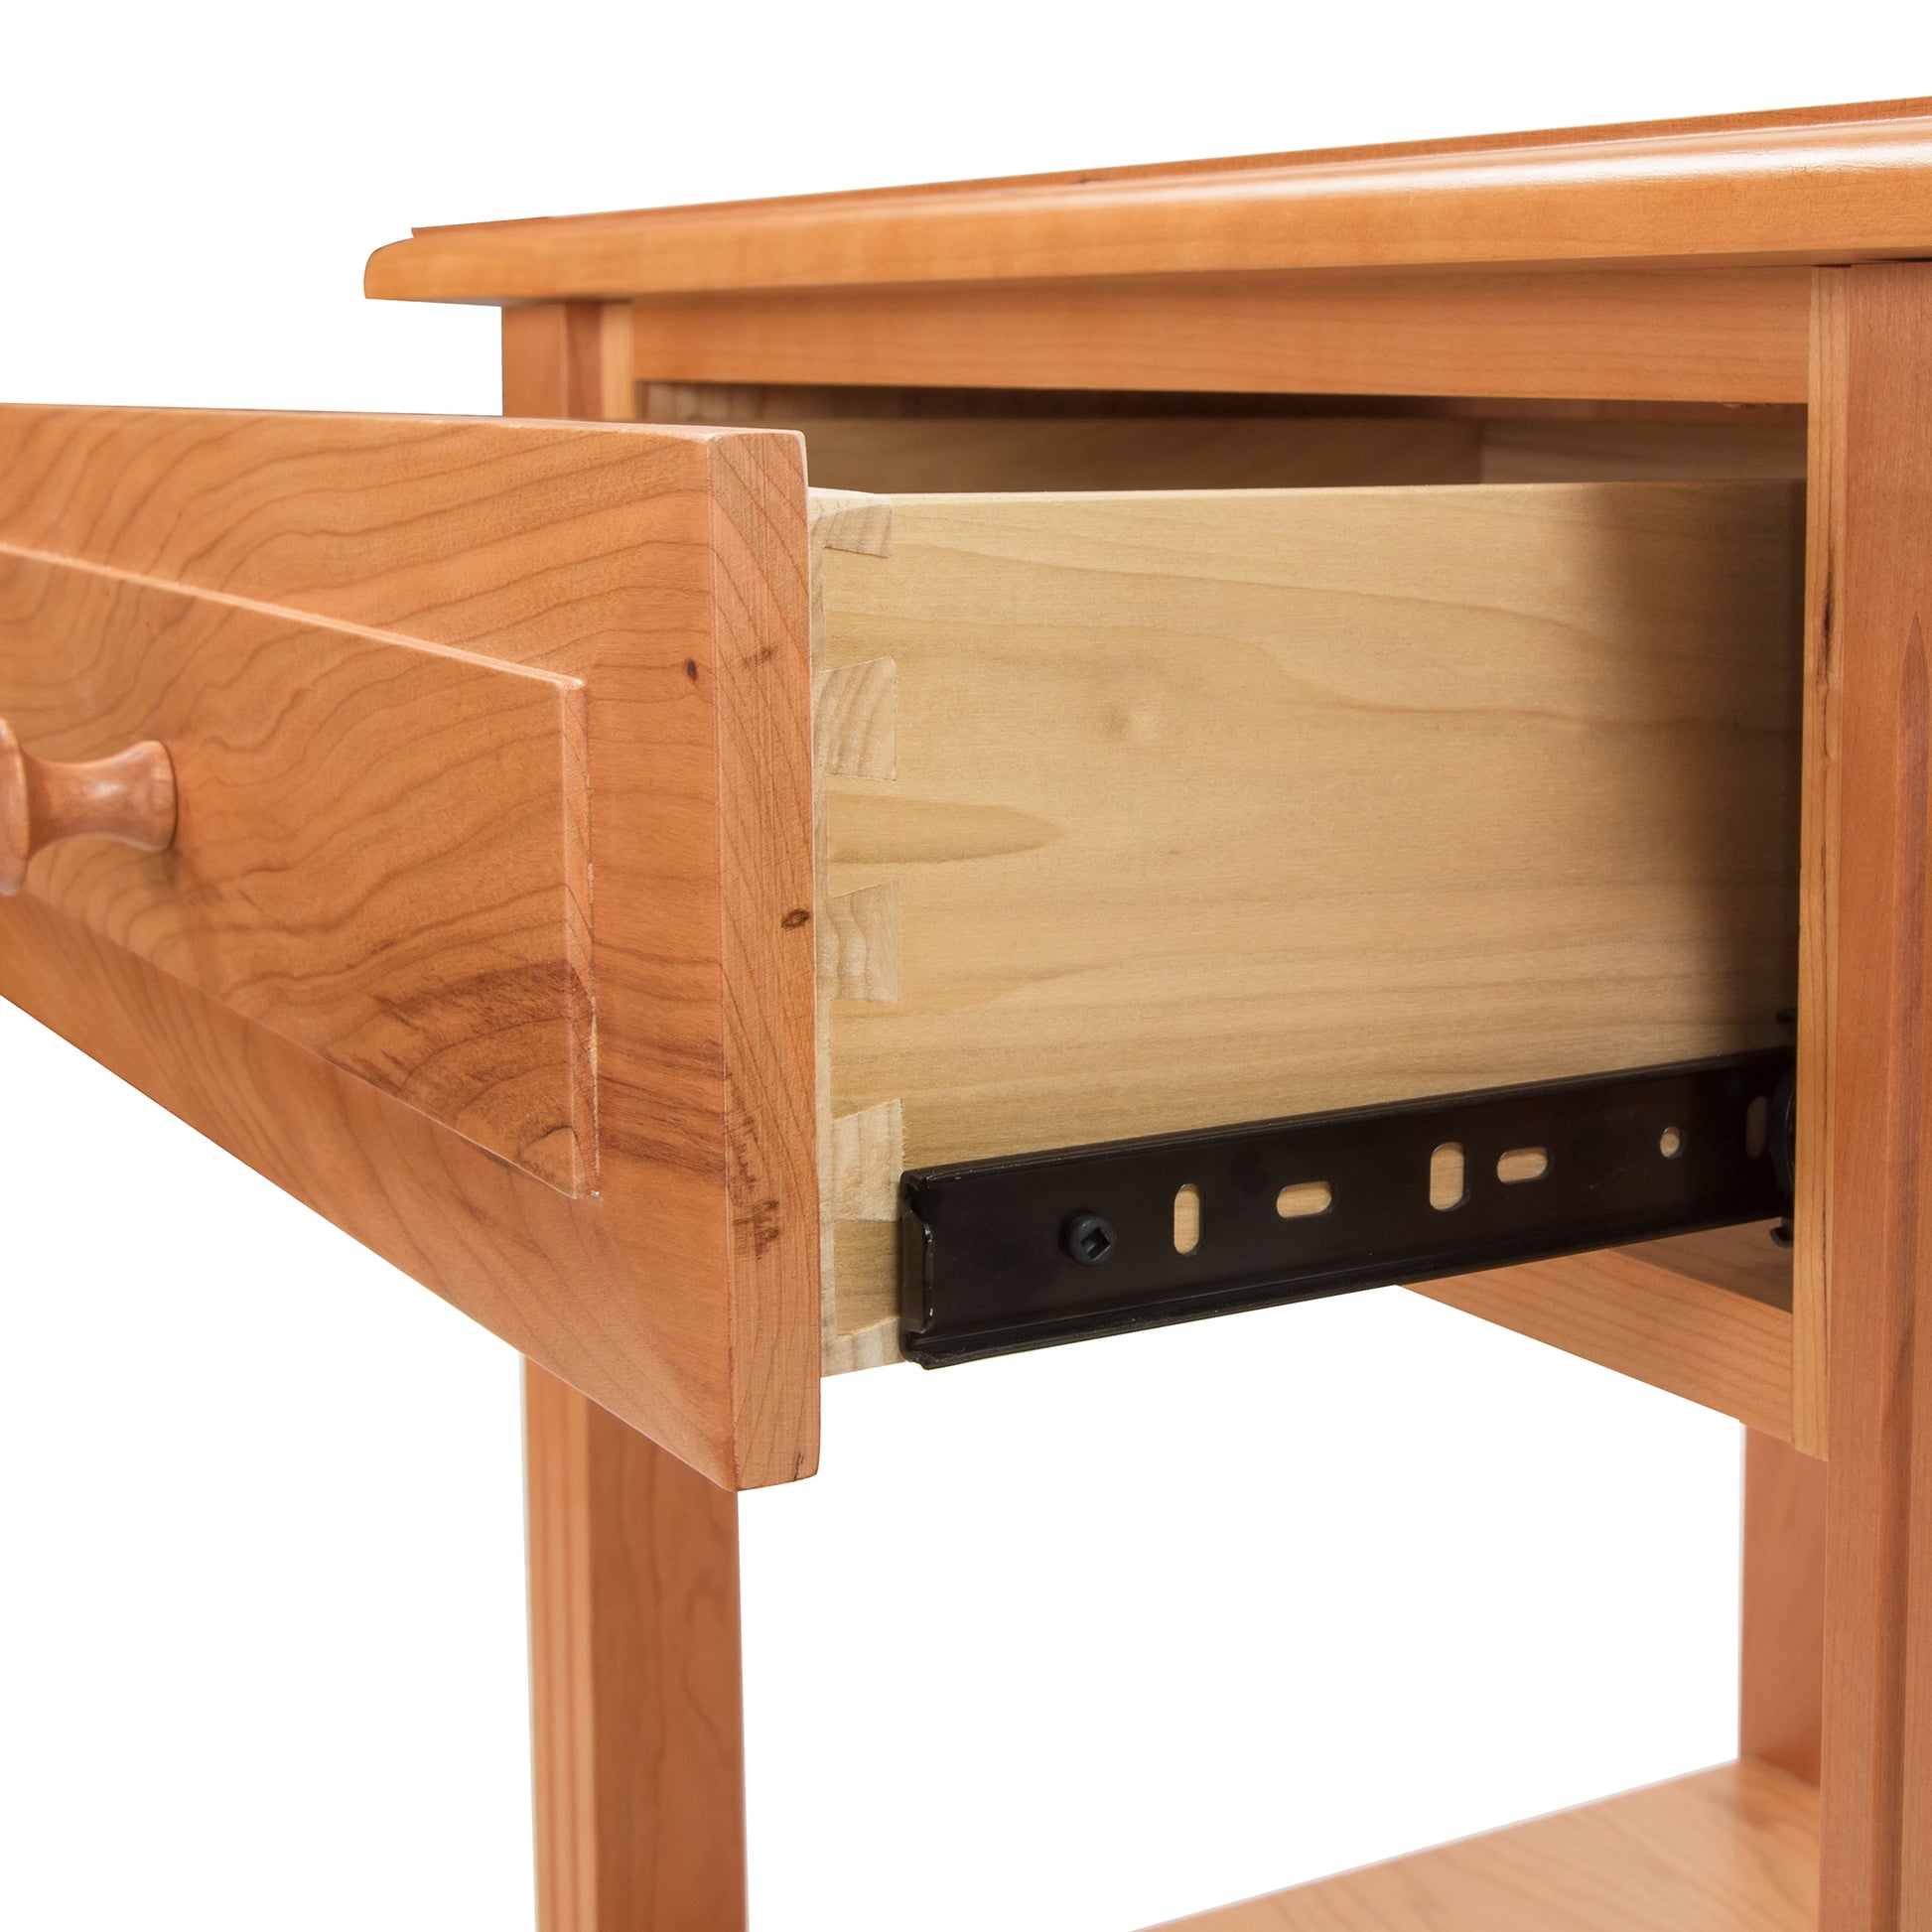 A Lyndon Furniture Renfrew Shaker 1-Drawer Open Shelf Nightstand, made from solid hardwoods.